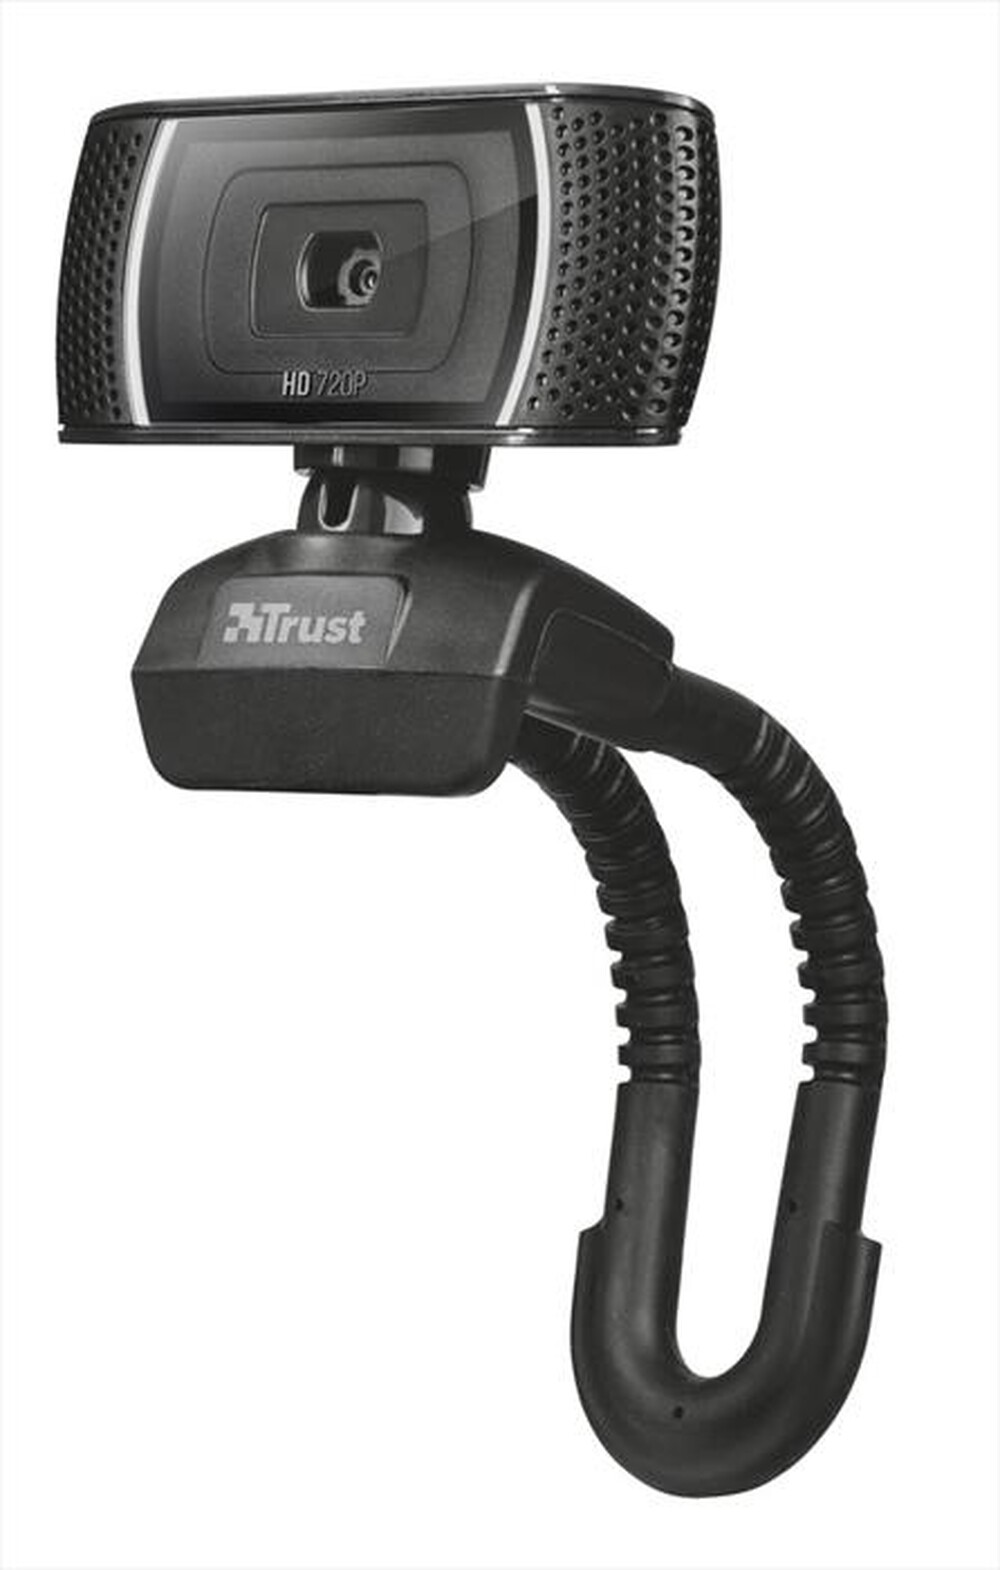 "TRUST - Trino HD video webcam - Black"